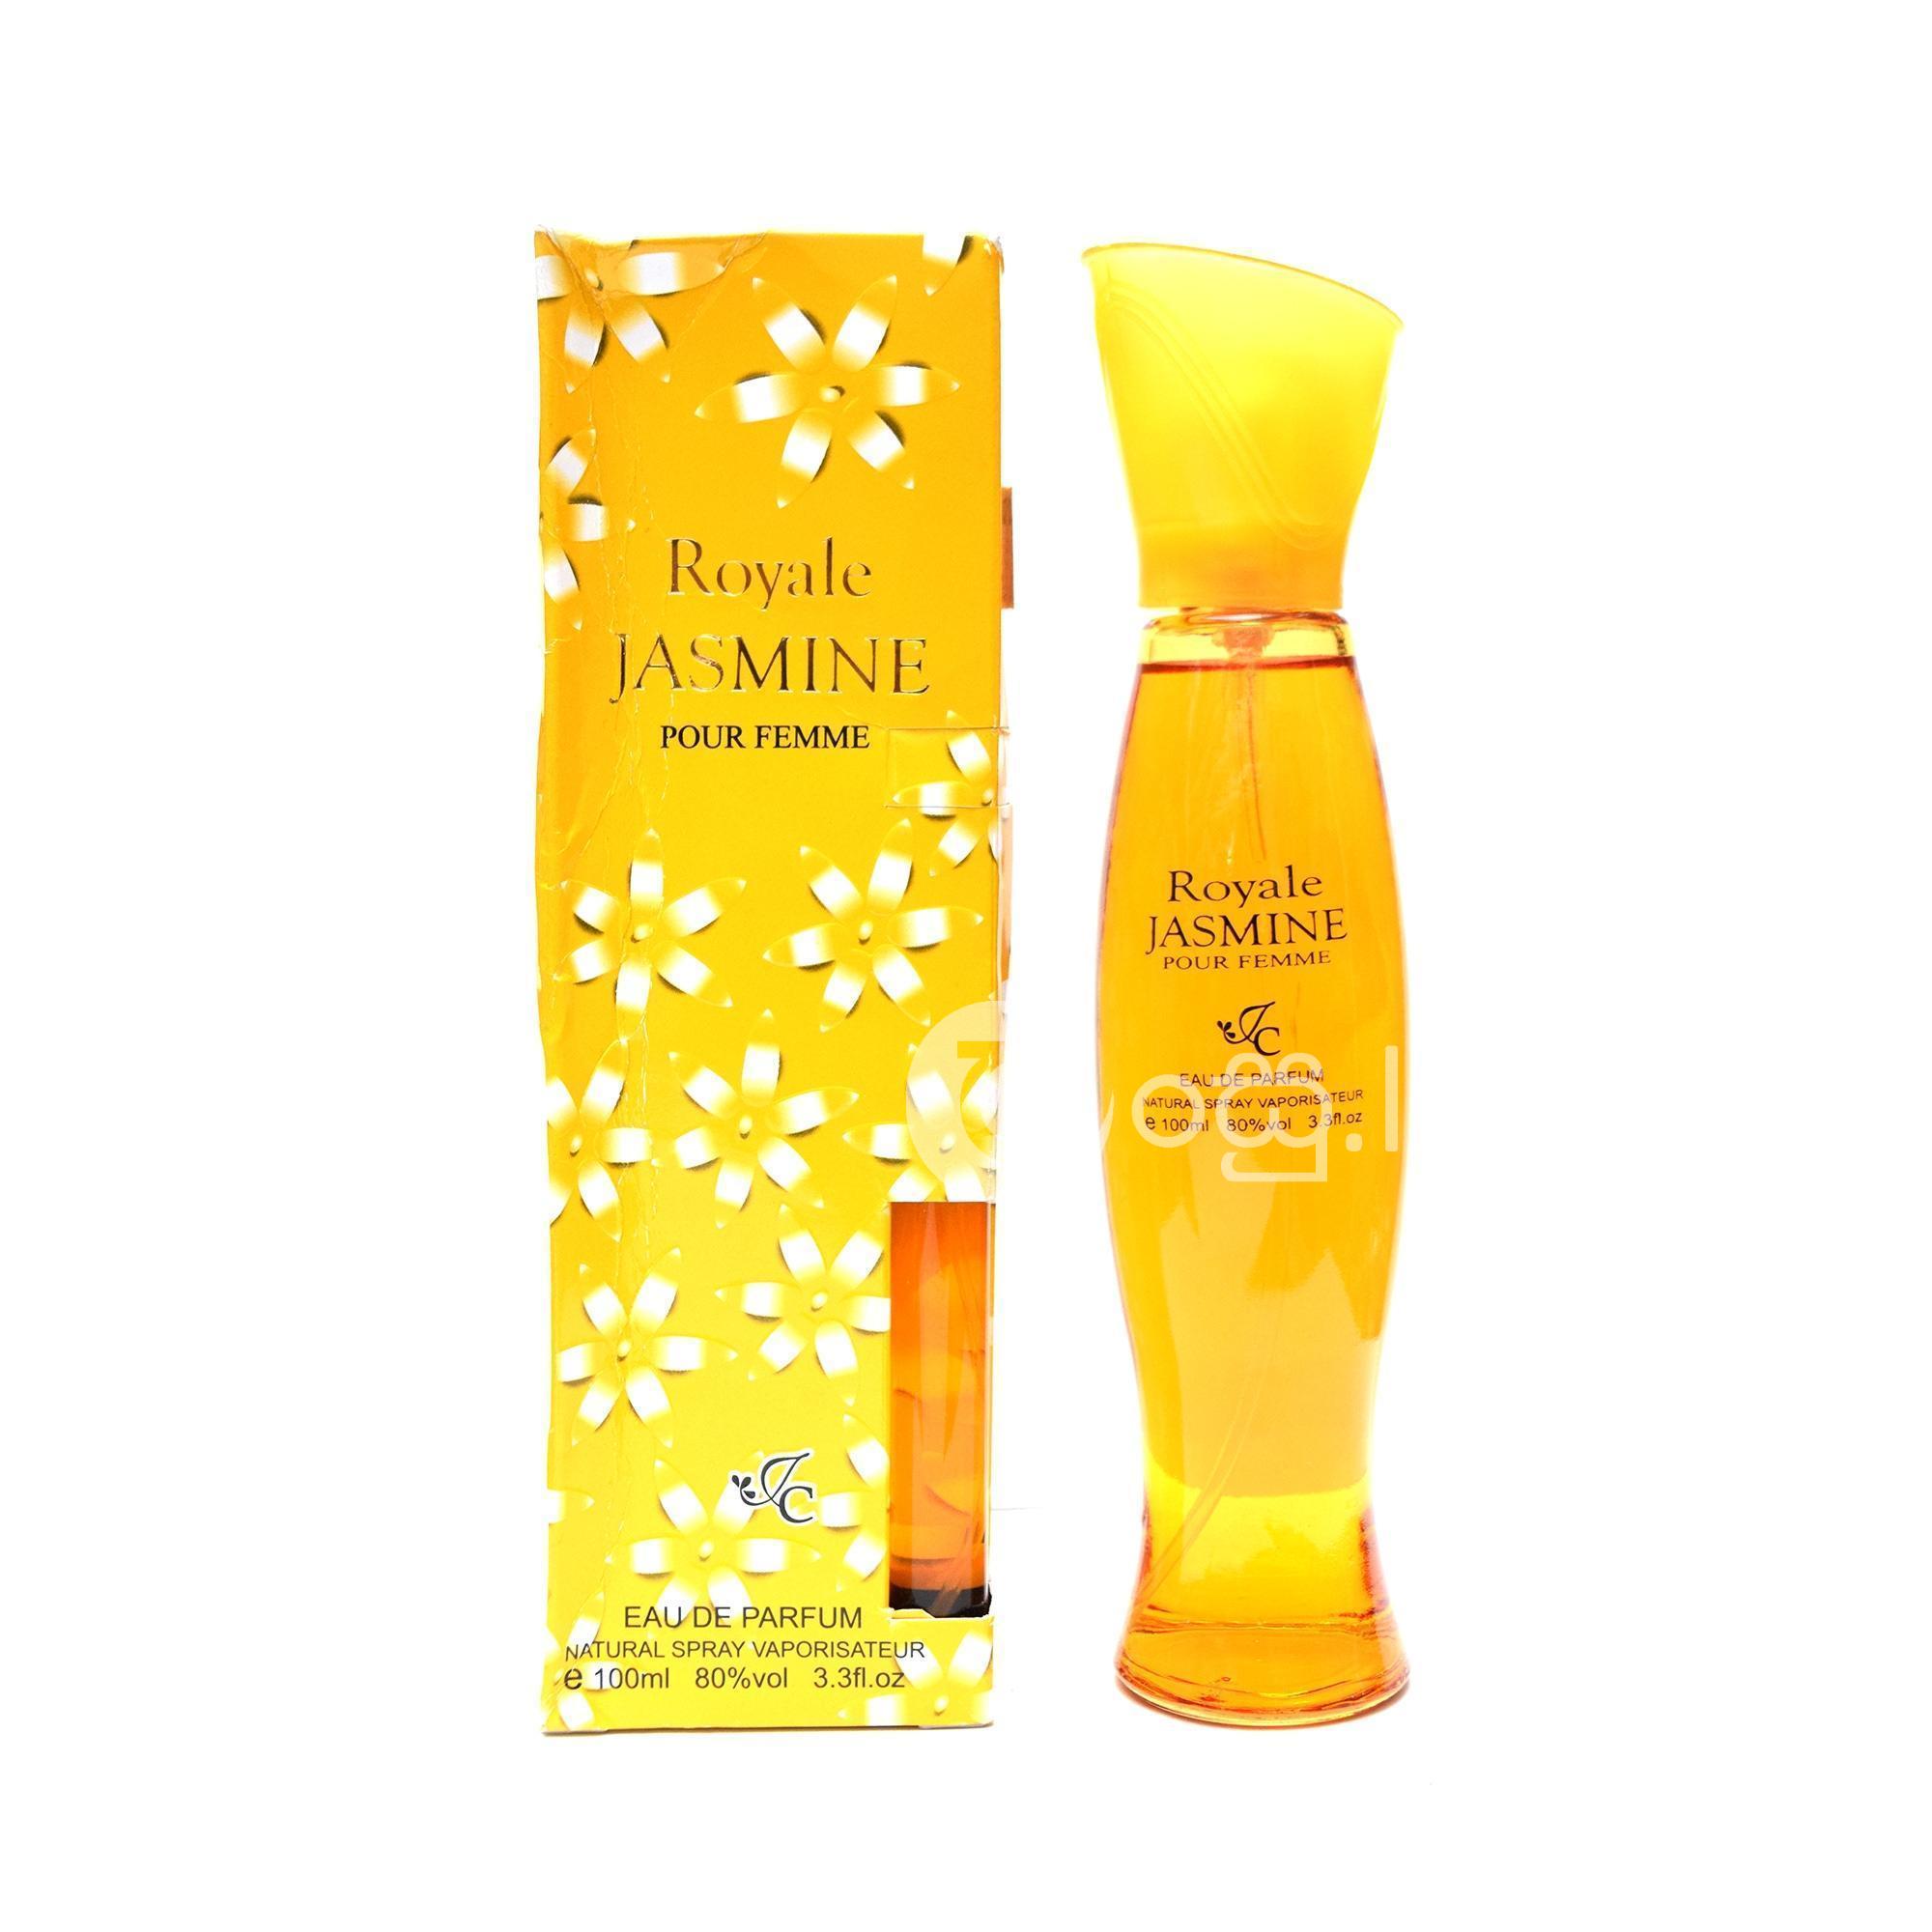 Royale Jasmine Perfume Health & Beauty Products in Colombo 15